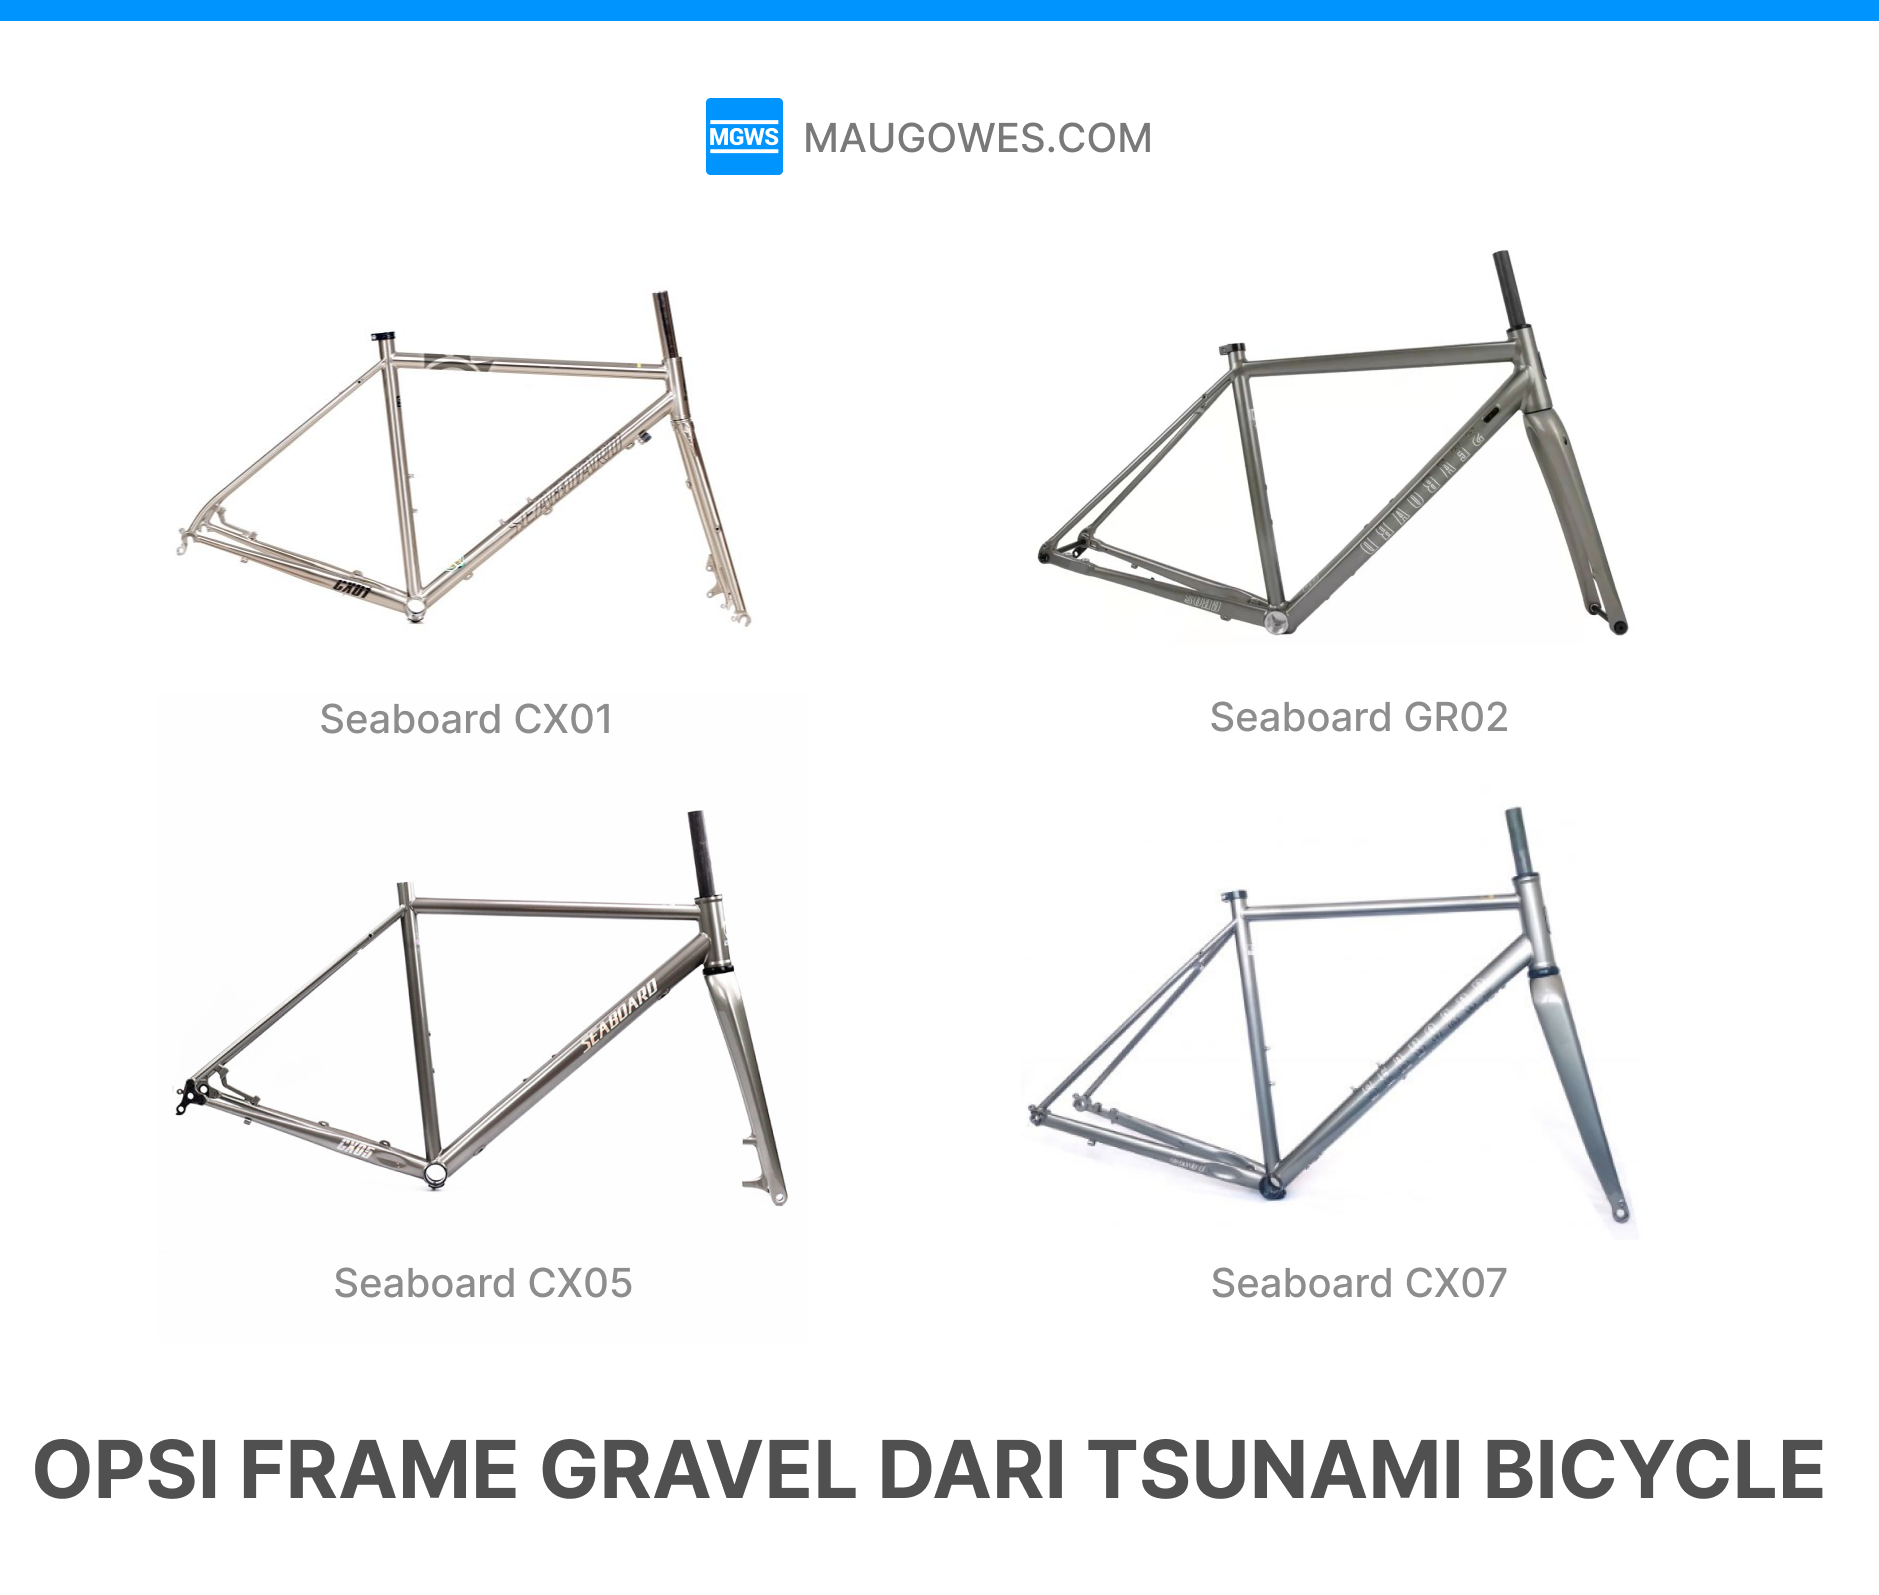 Opsi Frame Gravel Bike dari Tsunami Bicycle